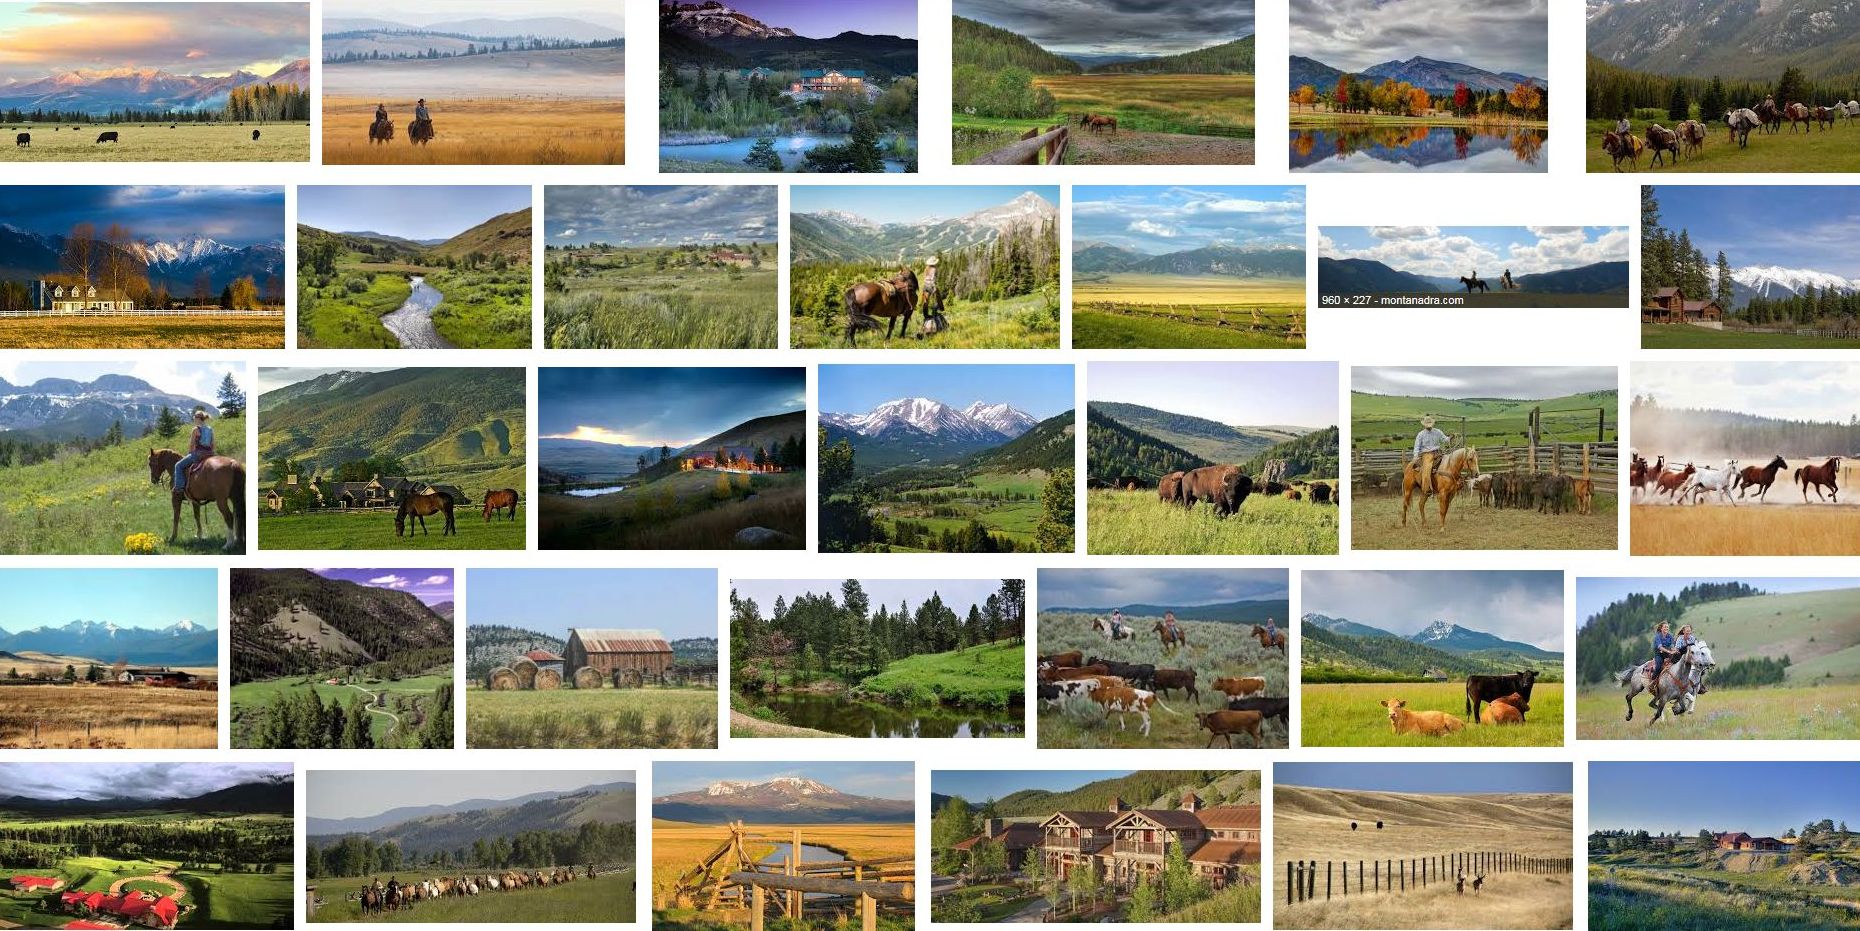 Montana Ranch Listings $100,000 To $200,000